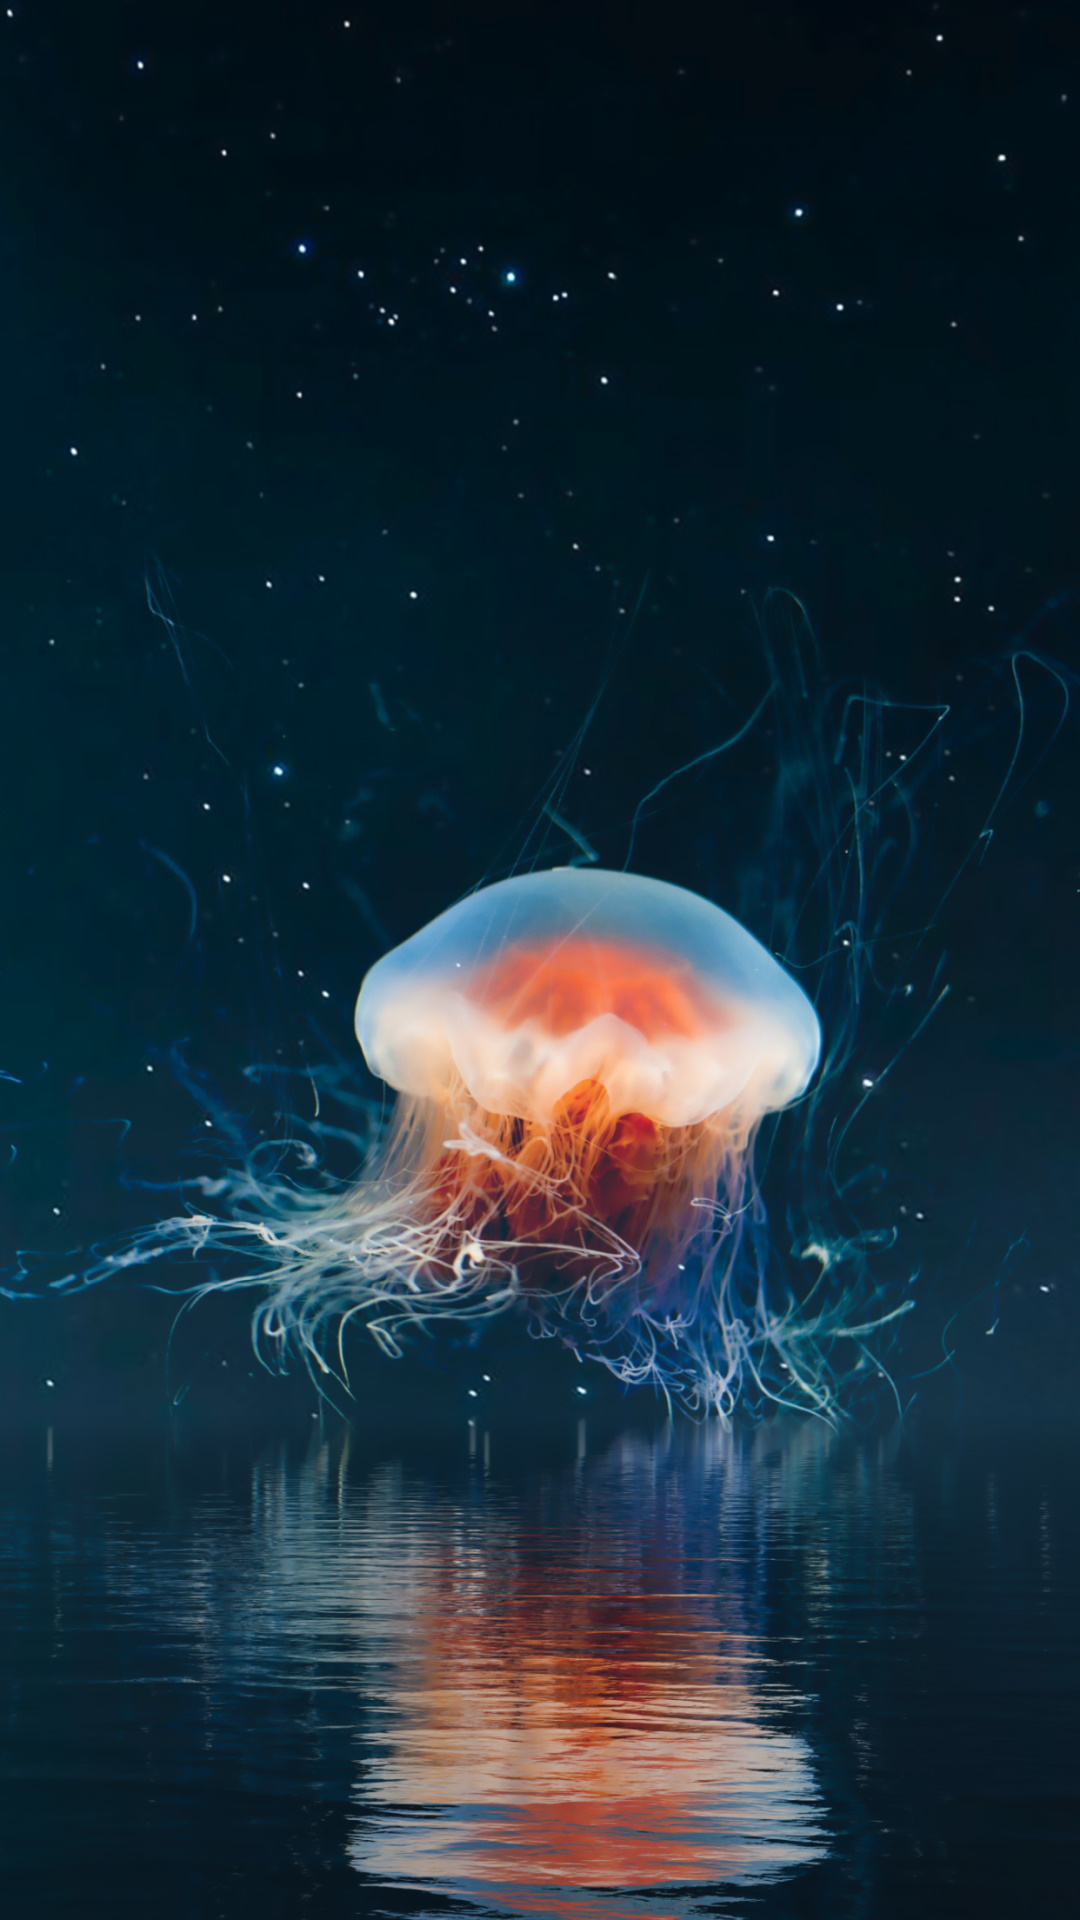 Jellyfish on the night sky wallpaper 1080x1920